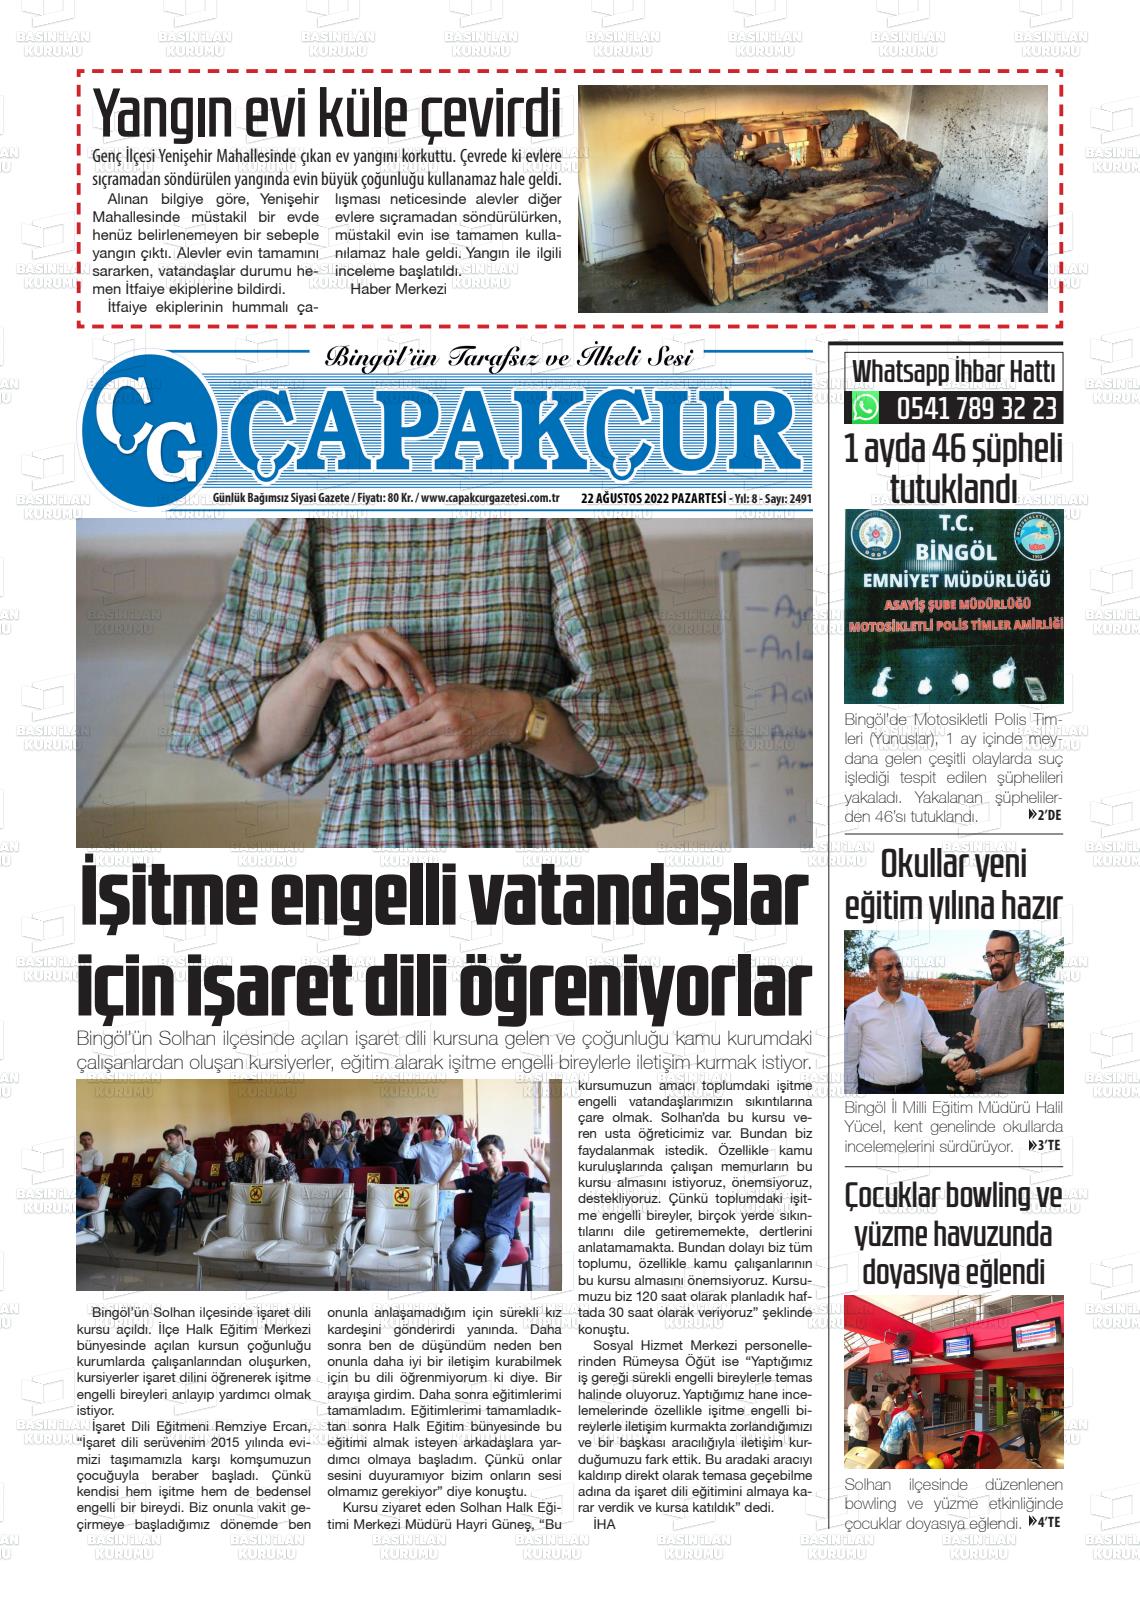 22 Ağustos 2022 Çapakçur Gazete Manşeti